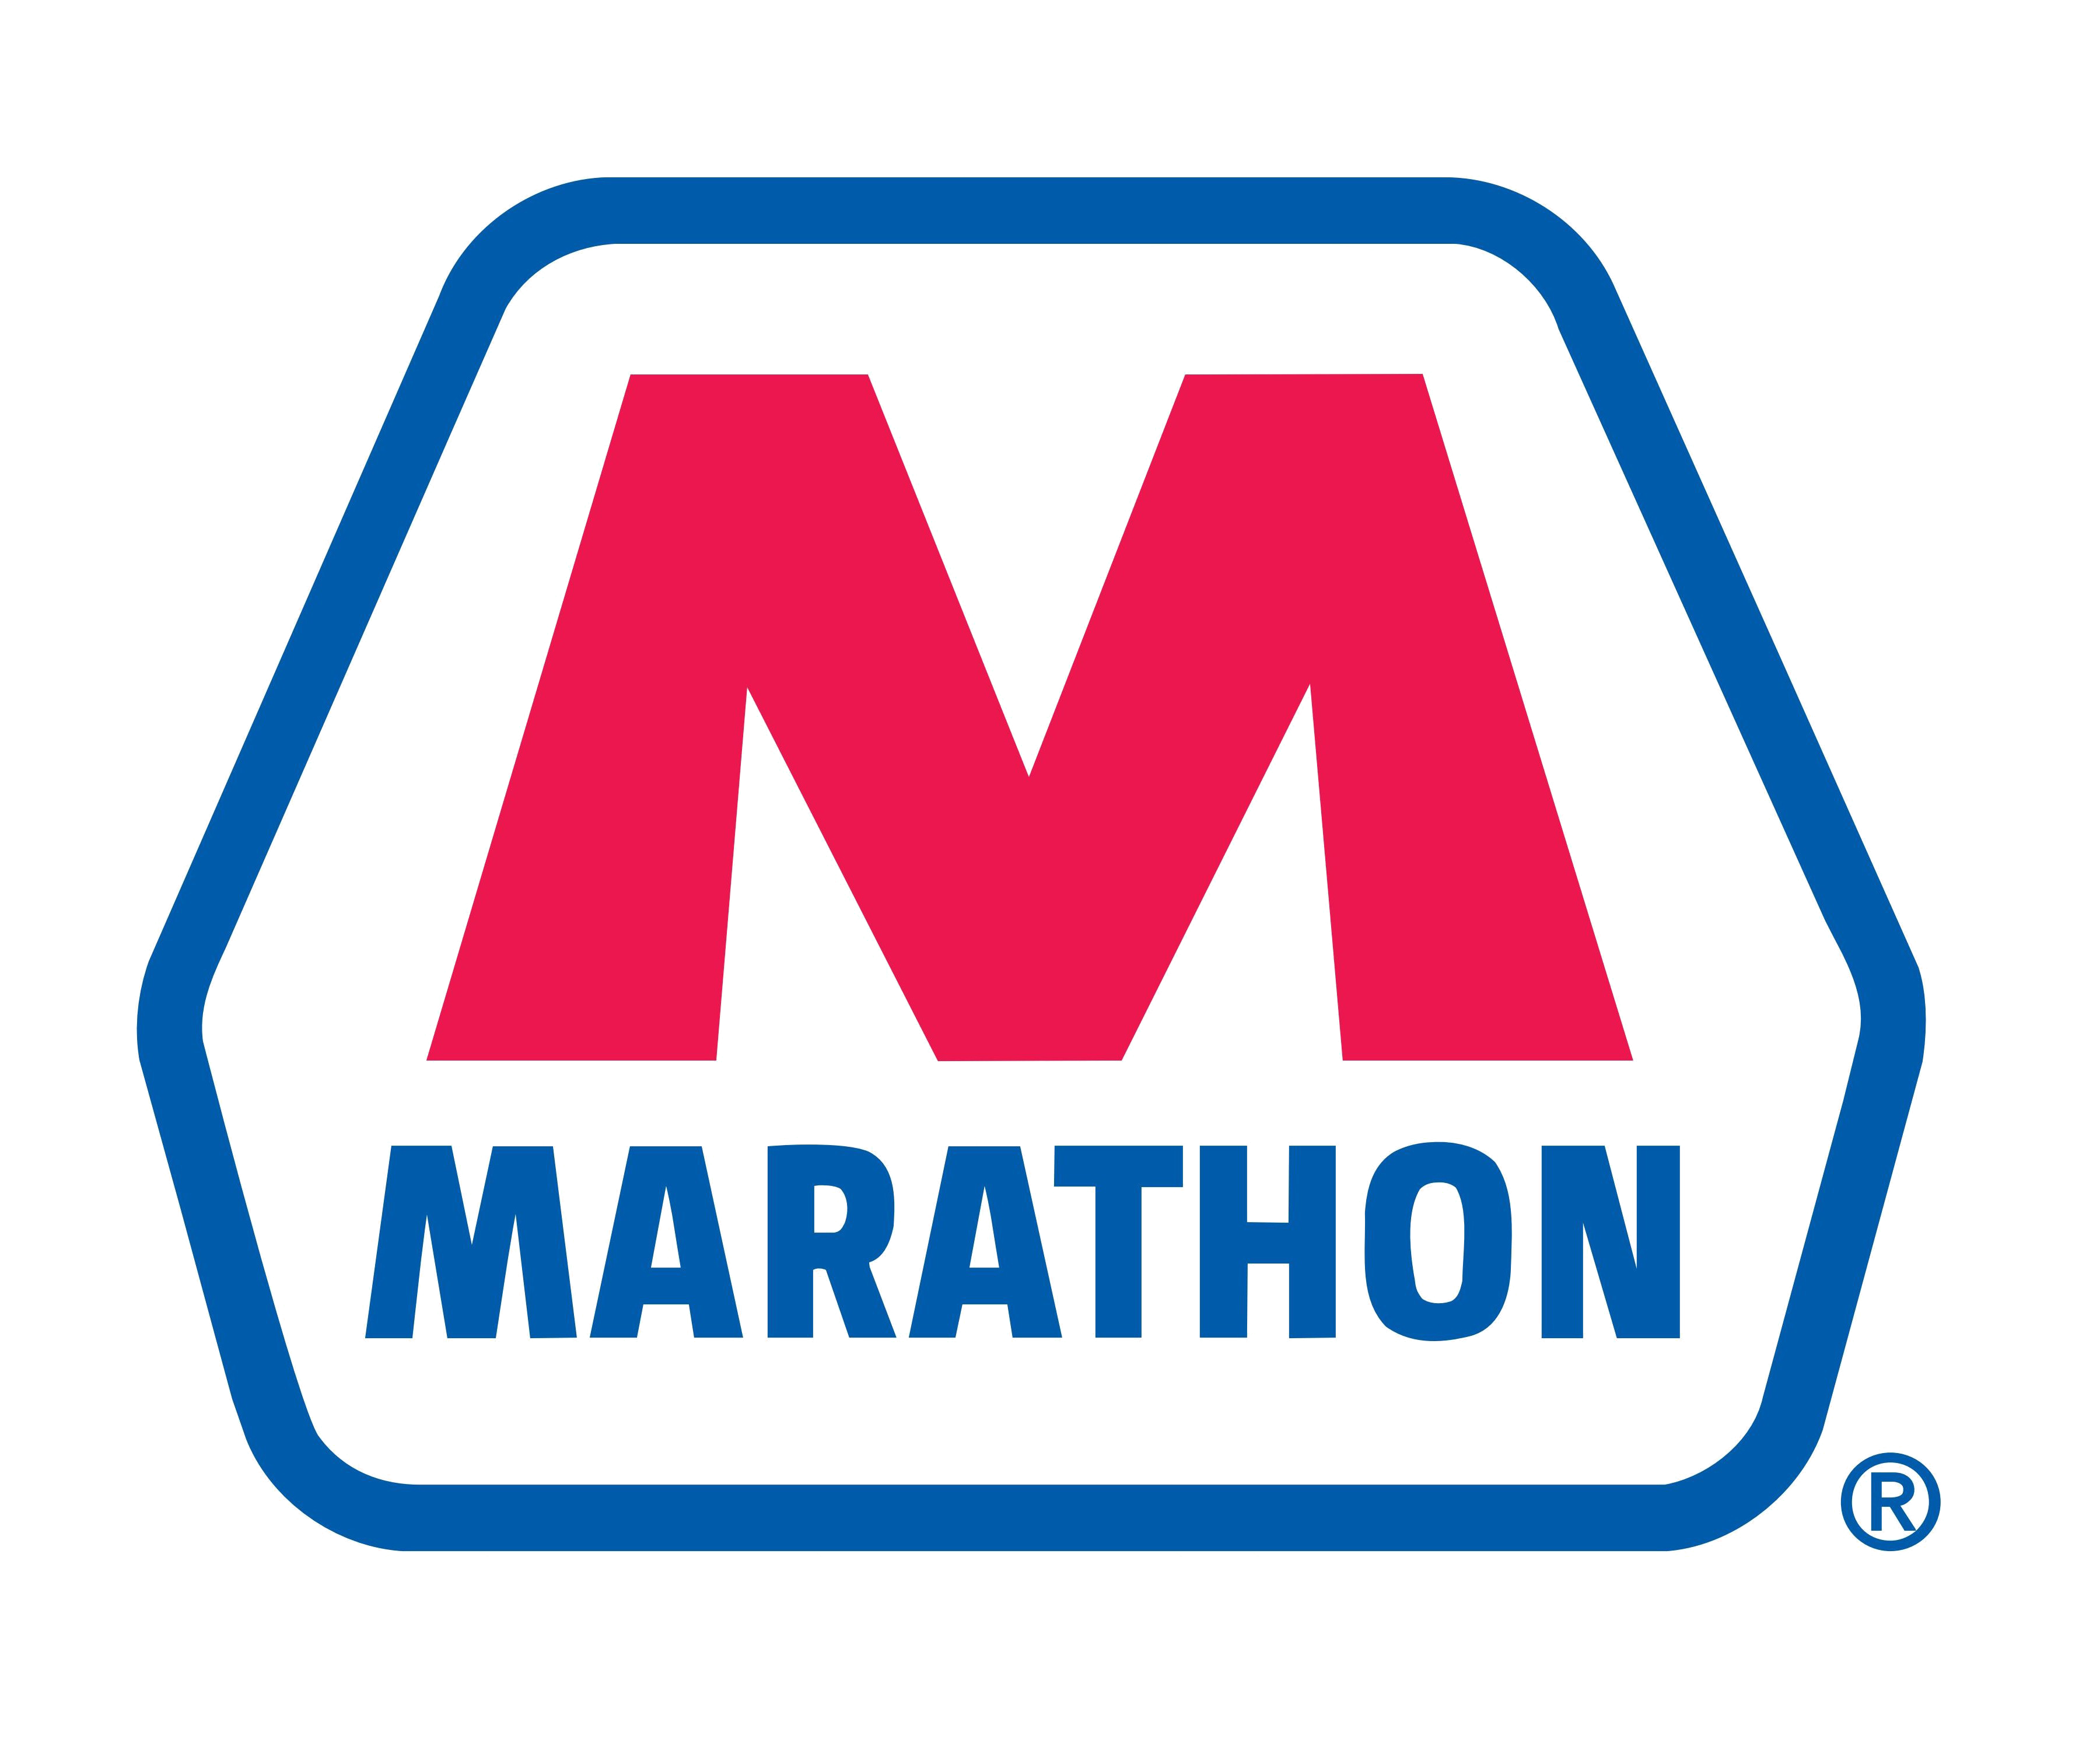 Download Marathon Petroleum Logo PNG Image for Free